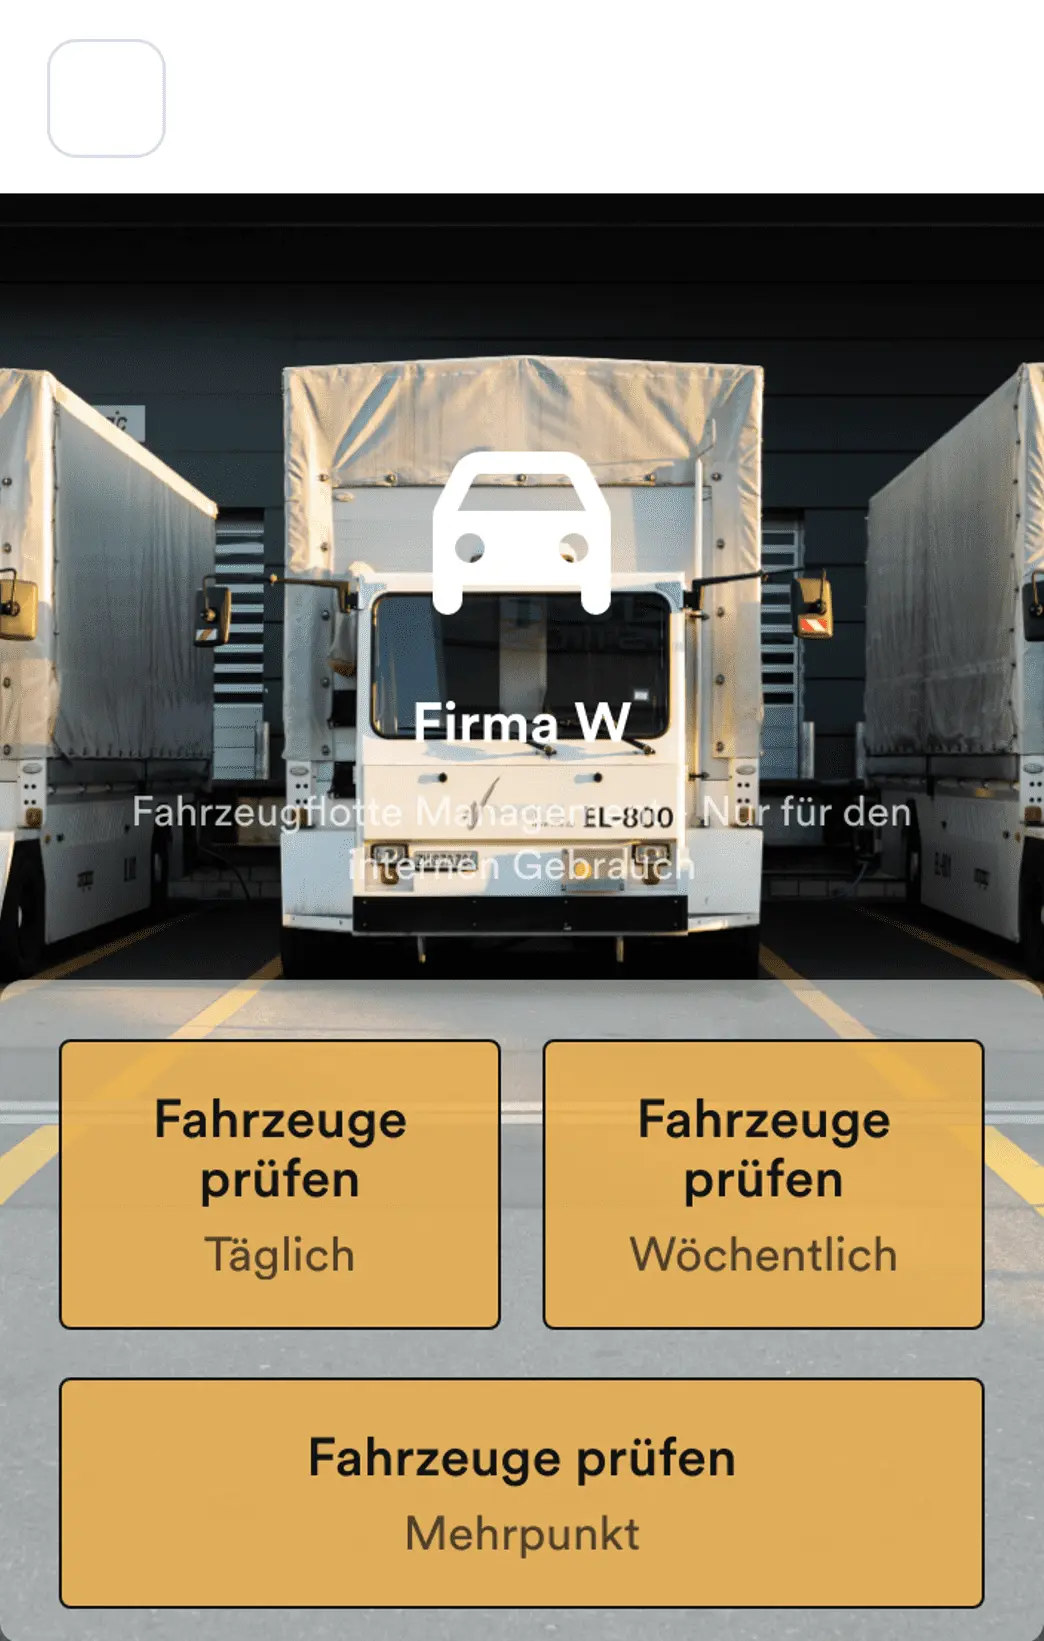 Digitale Fahrzeuginspektion App